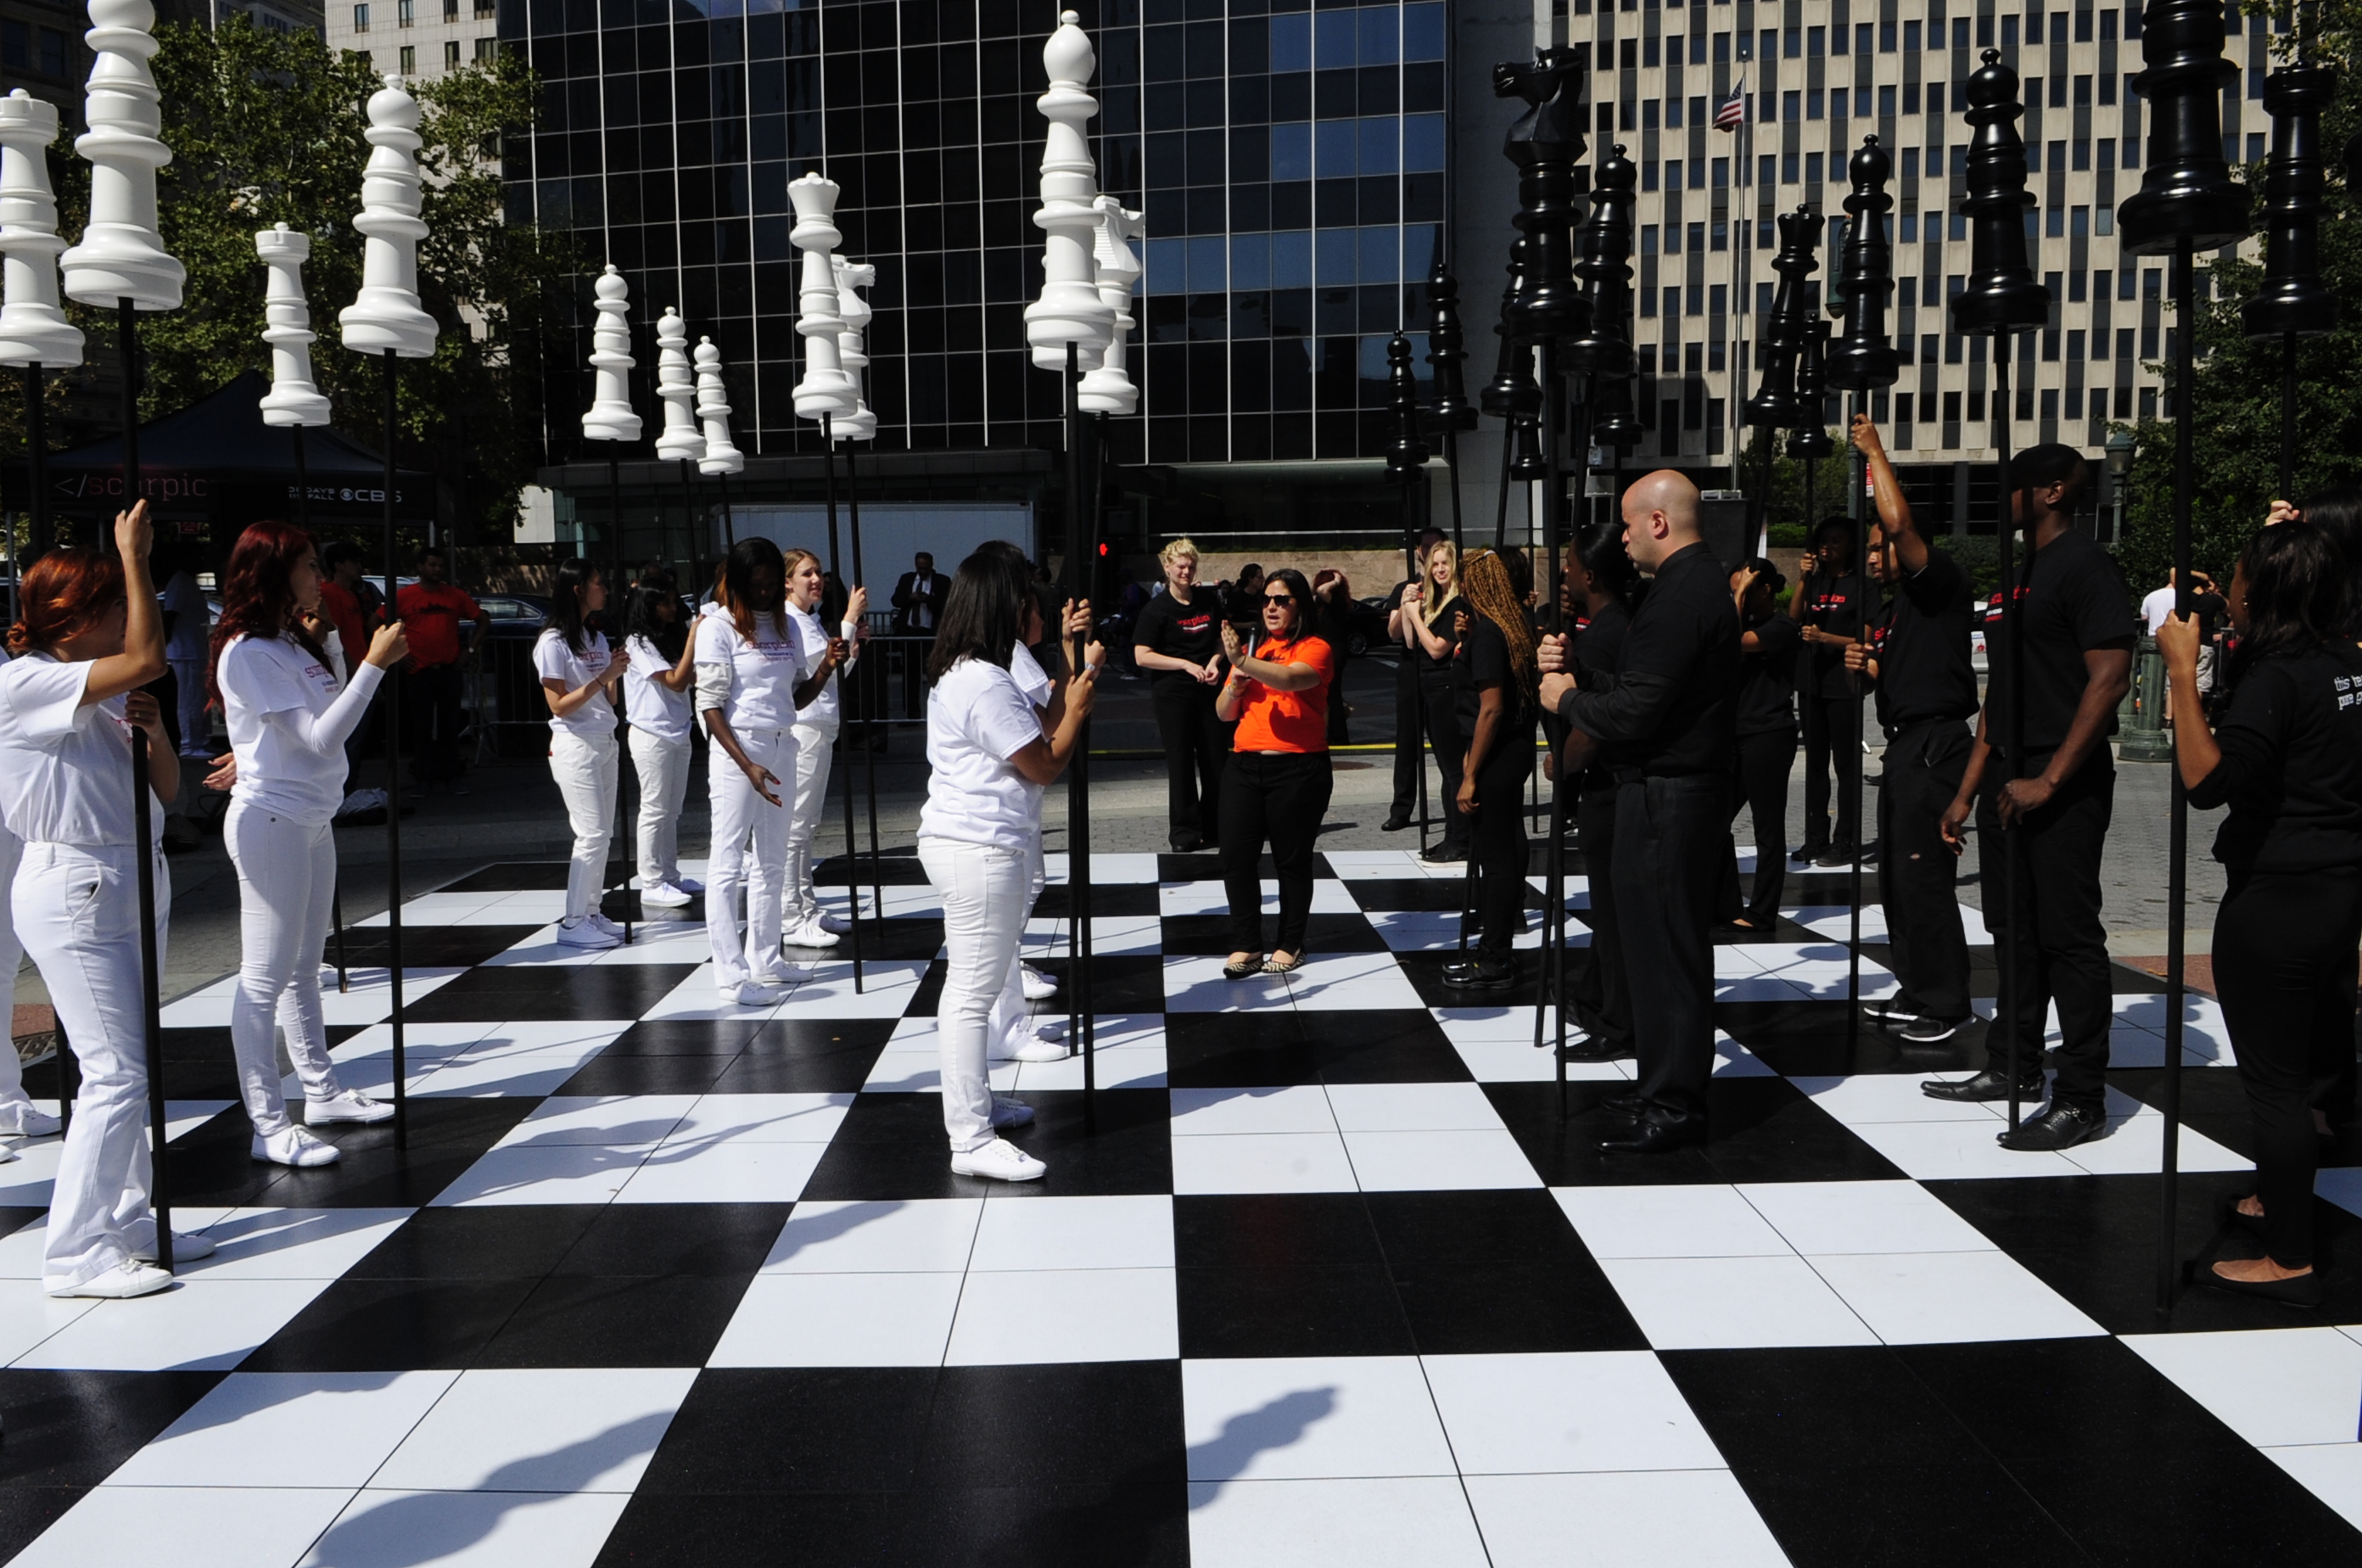 Human Chess Game Scorpion NYC Event - Page 5 - Scorpion Photos - CBS.com